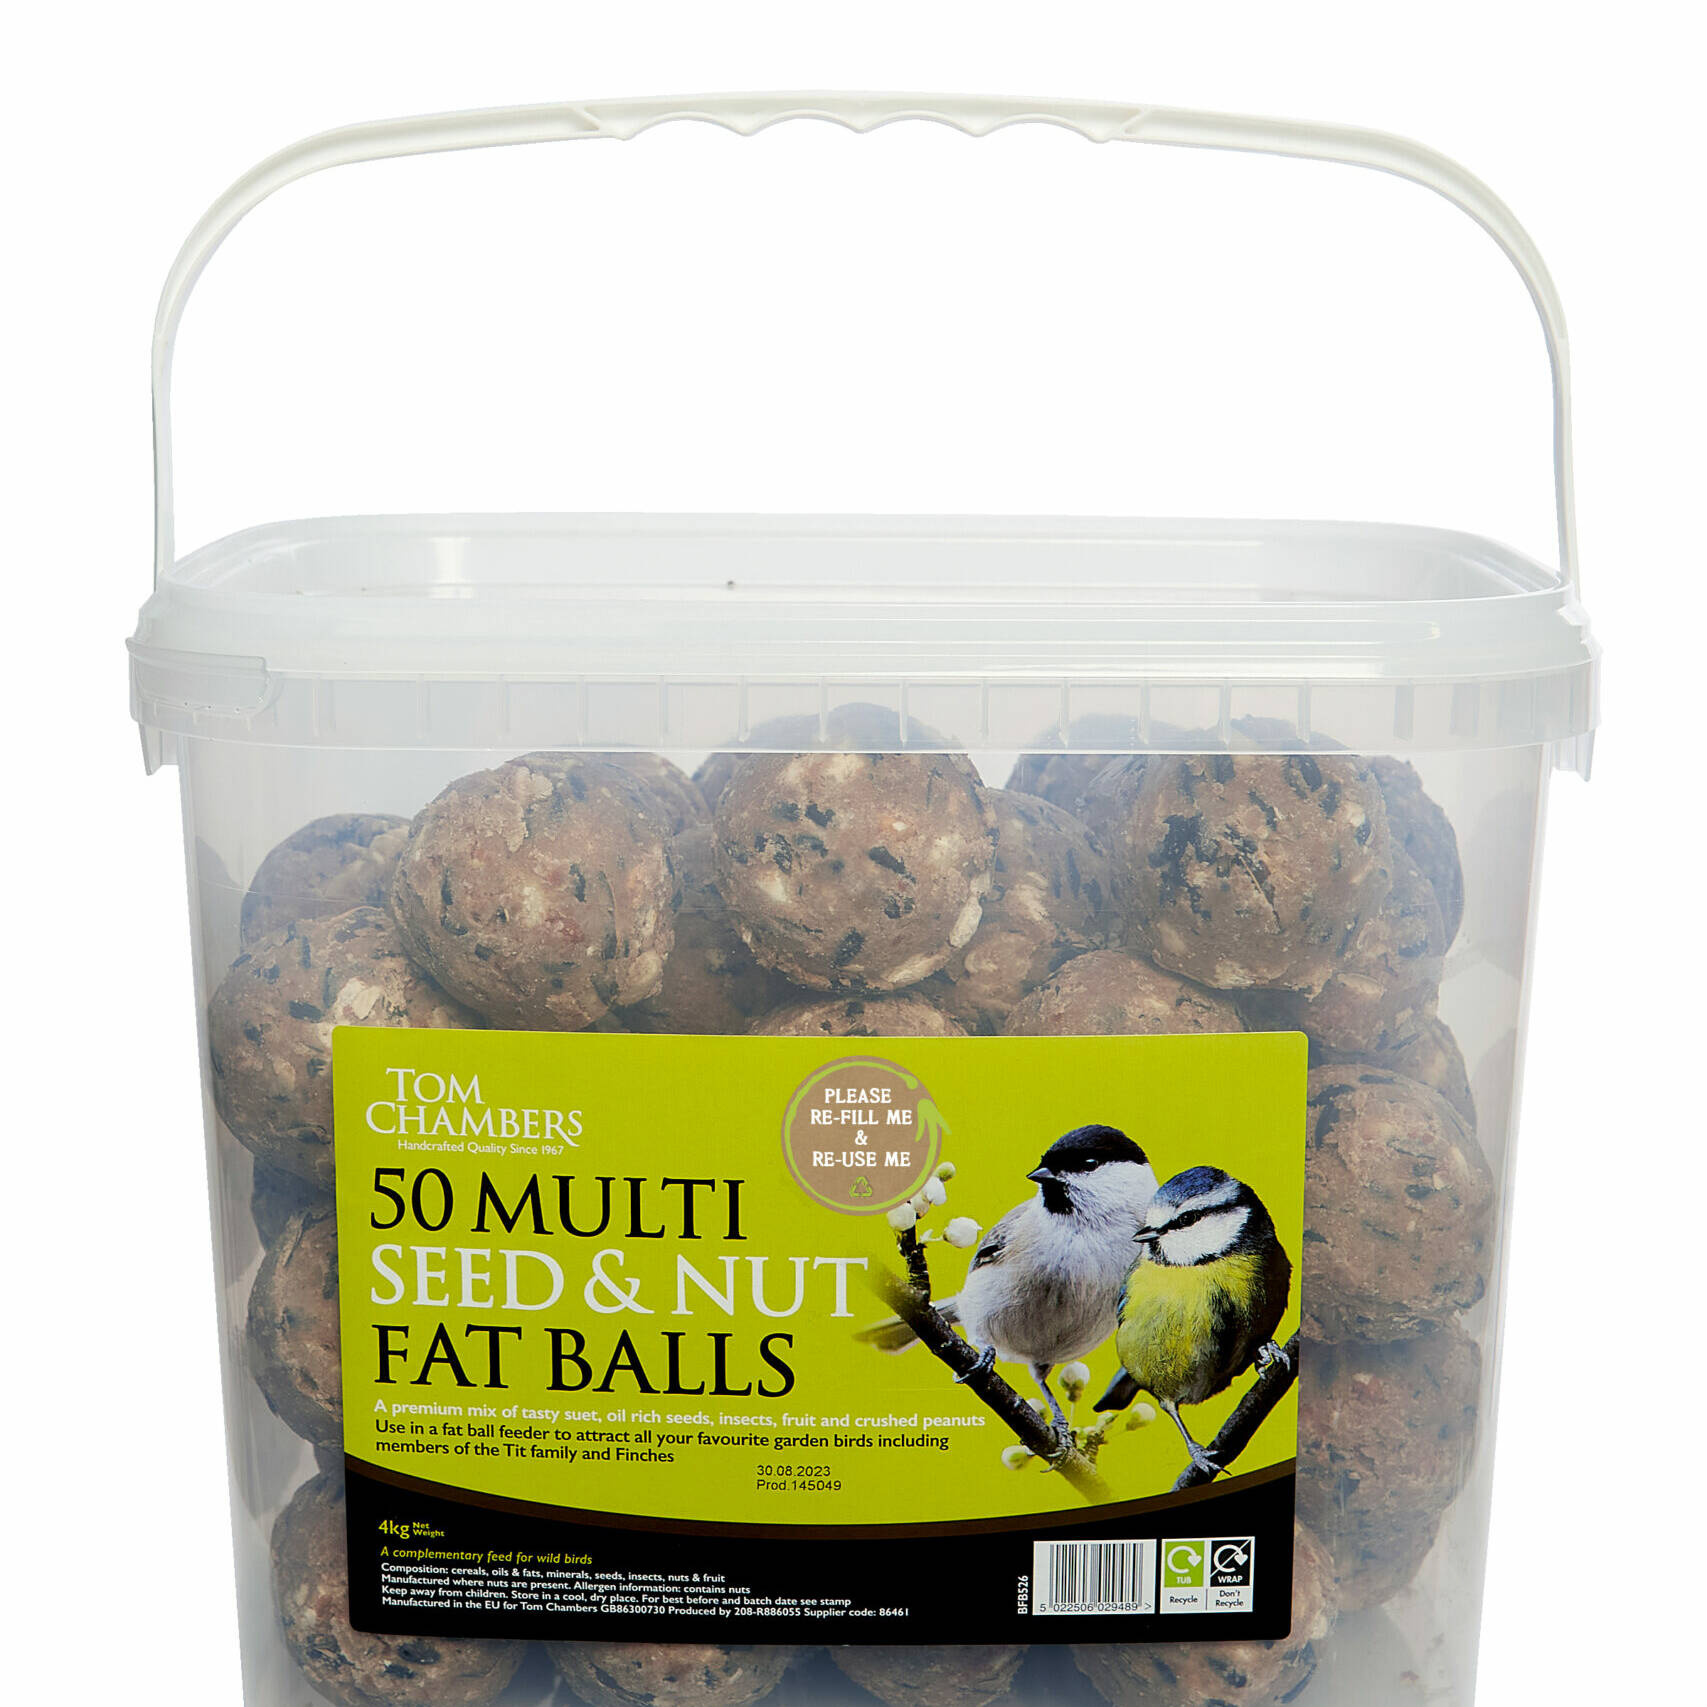 Tom chambers Fat Balls - 50 Tub - Multi Seed & Nut Fat Ball